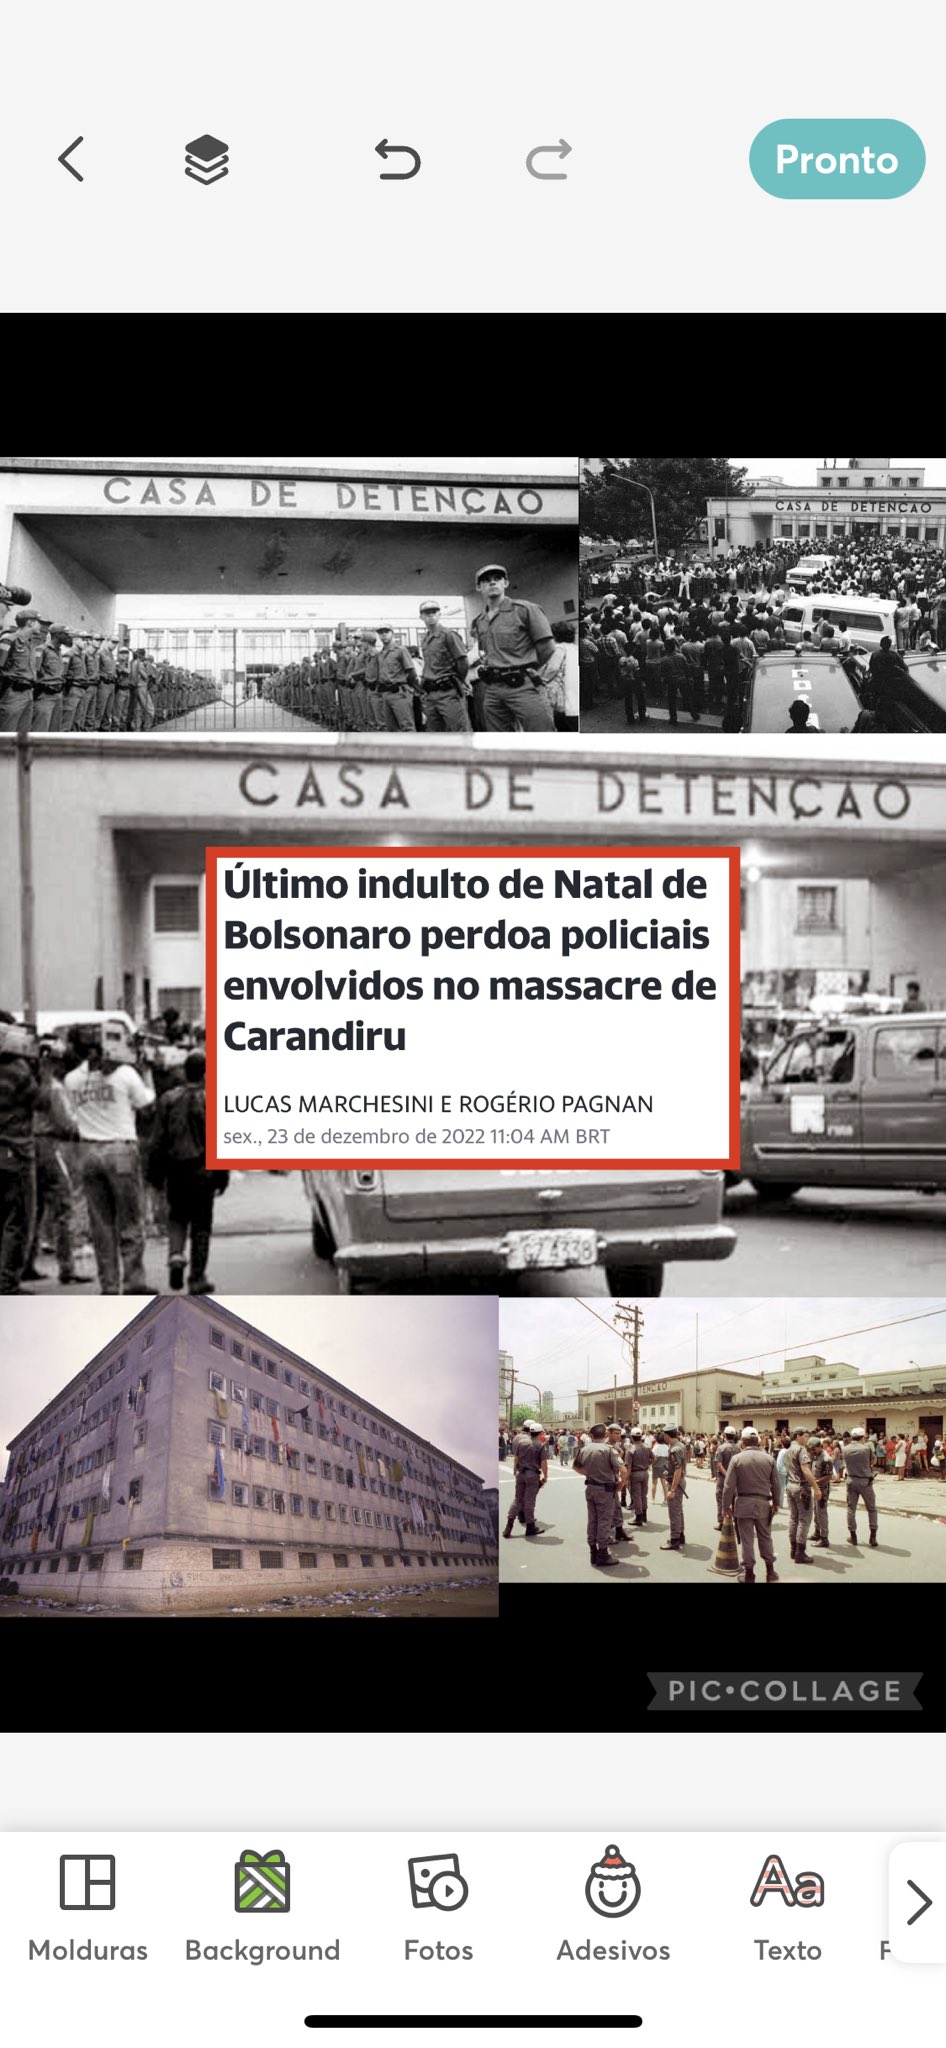 Indulto de Natal de Bolsonaro beneficia envolvidos no massacre do Carandiru  - Governo - SBT News